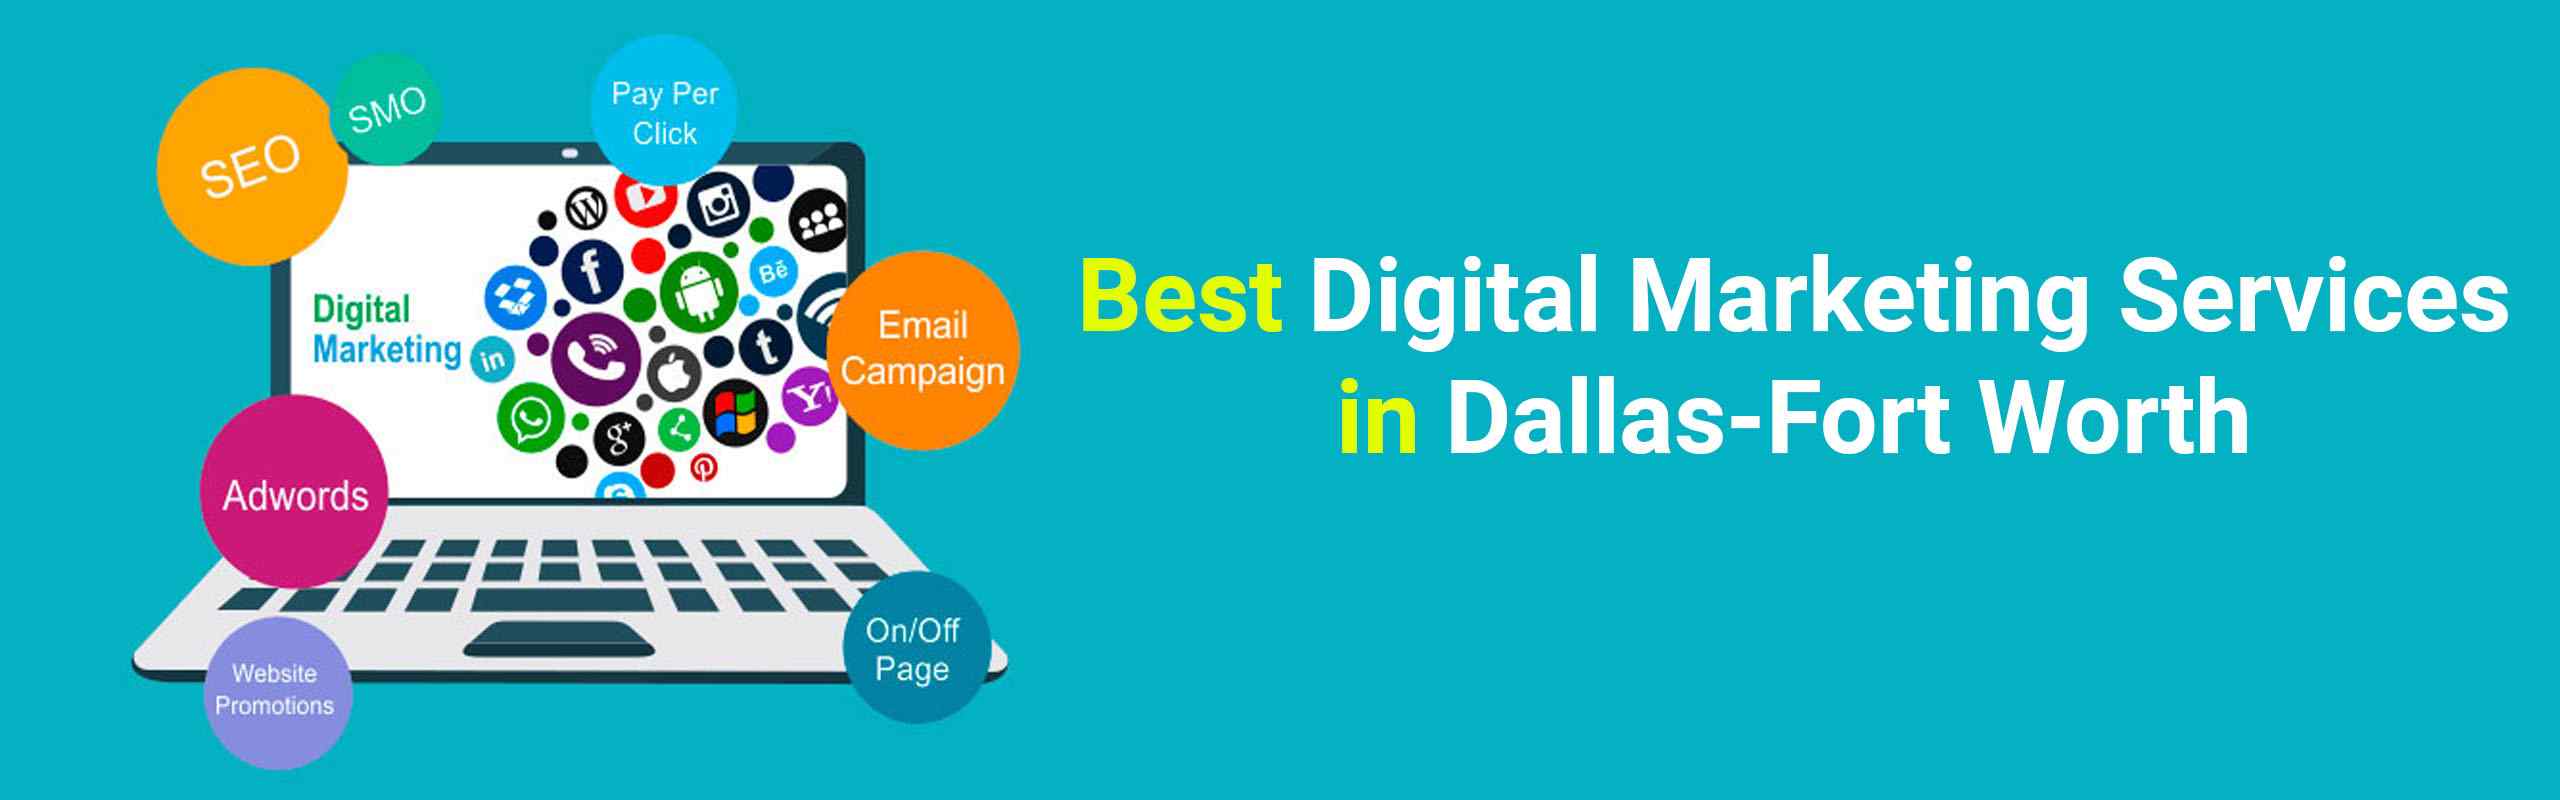 digital marketing services in Dallas